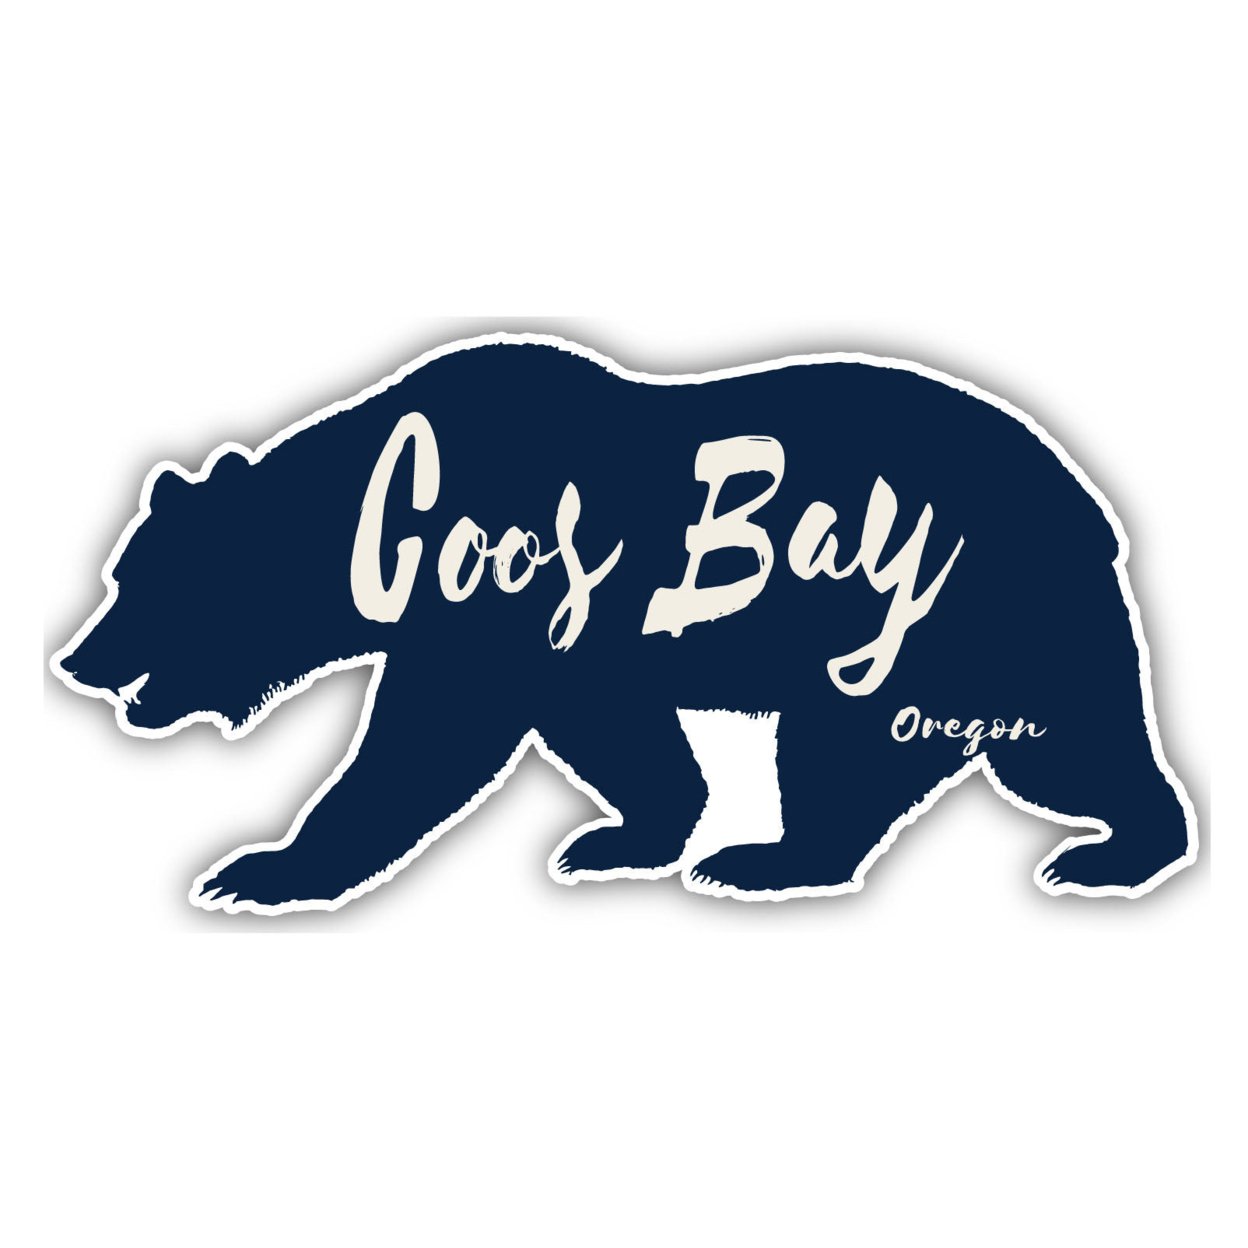 Coos Bay Oregon Souvenir Decorative Stickers (Choose Theme And Size) - Single Unit, 8-Inch, Camp Life